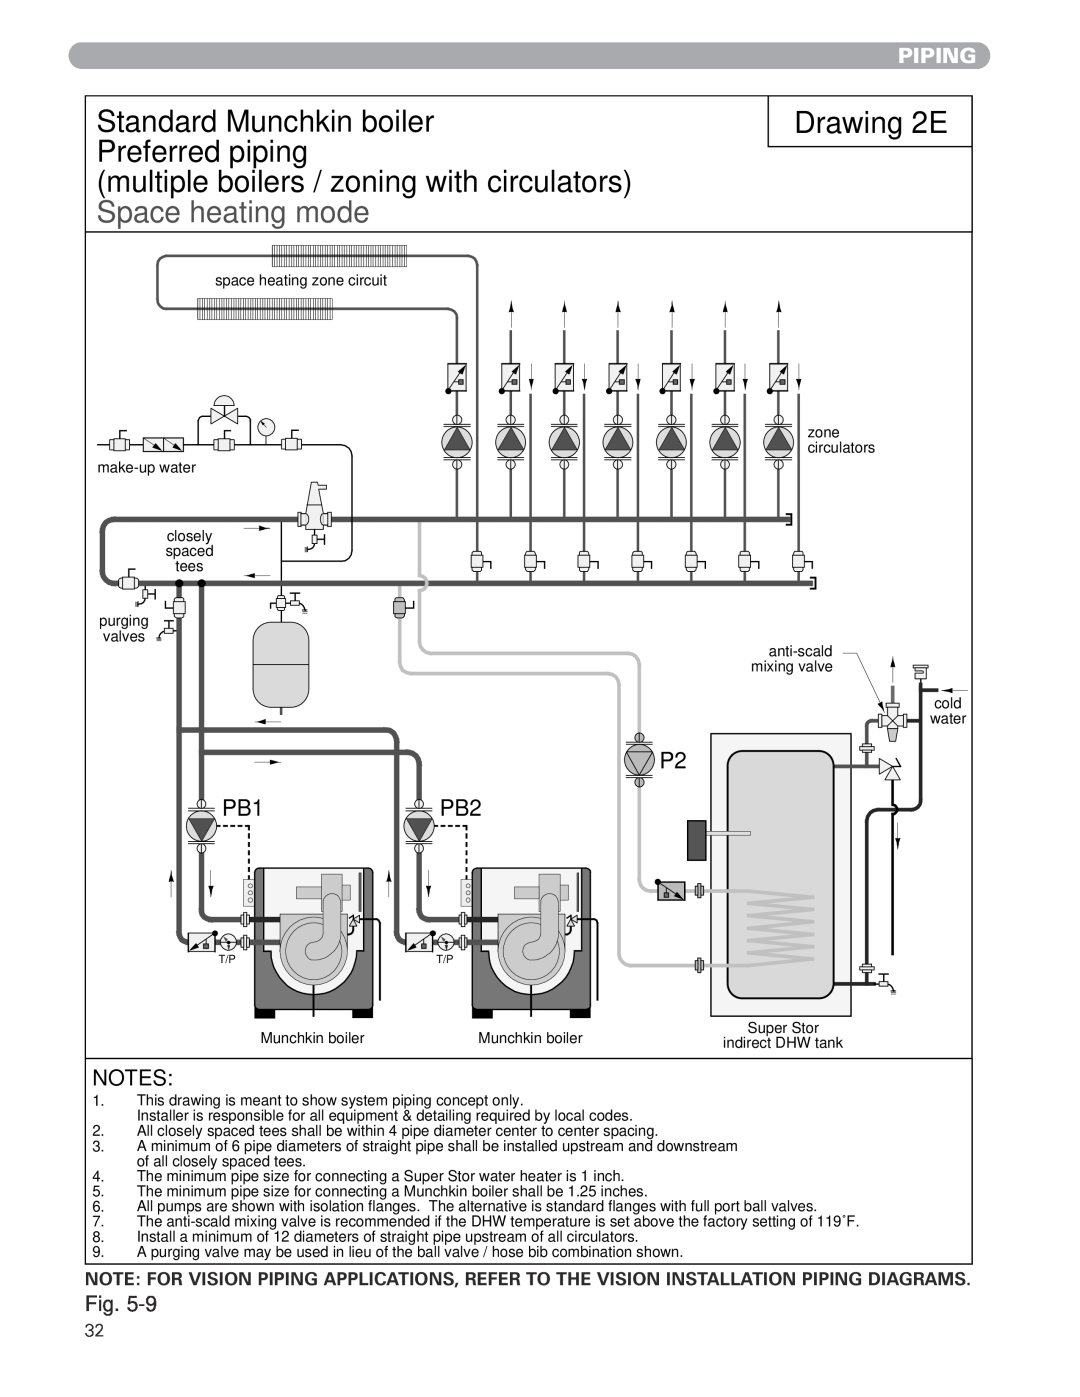 Munchkin MUNCHKIN HIGH EFFICIENCY HEATER with the "925" Controller Standard Munchkin boiler Preferred piping, Drawing 2E 